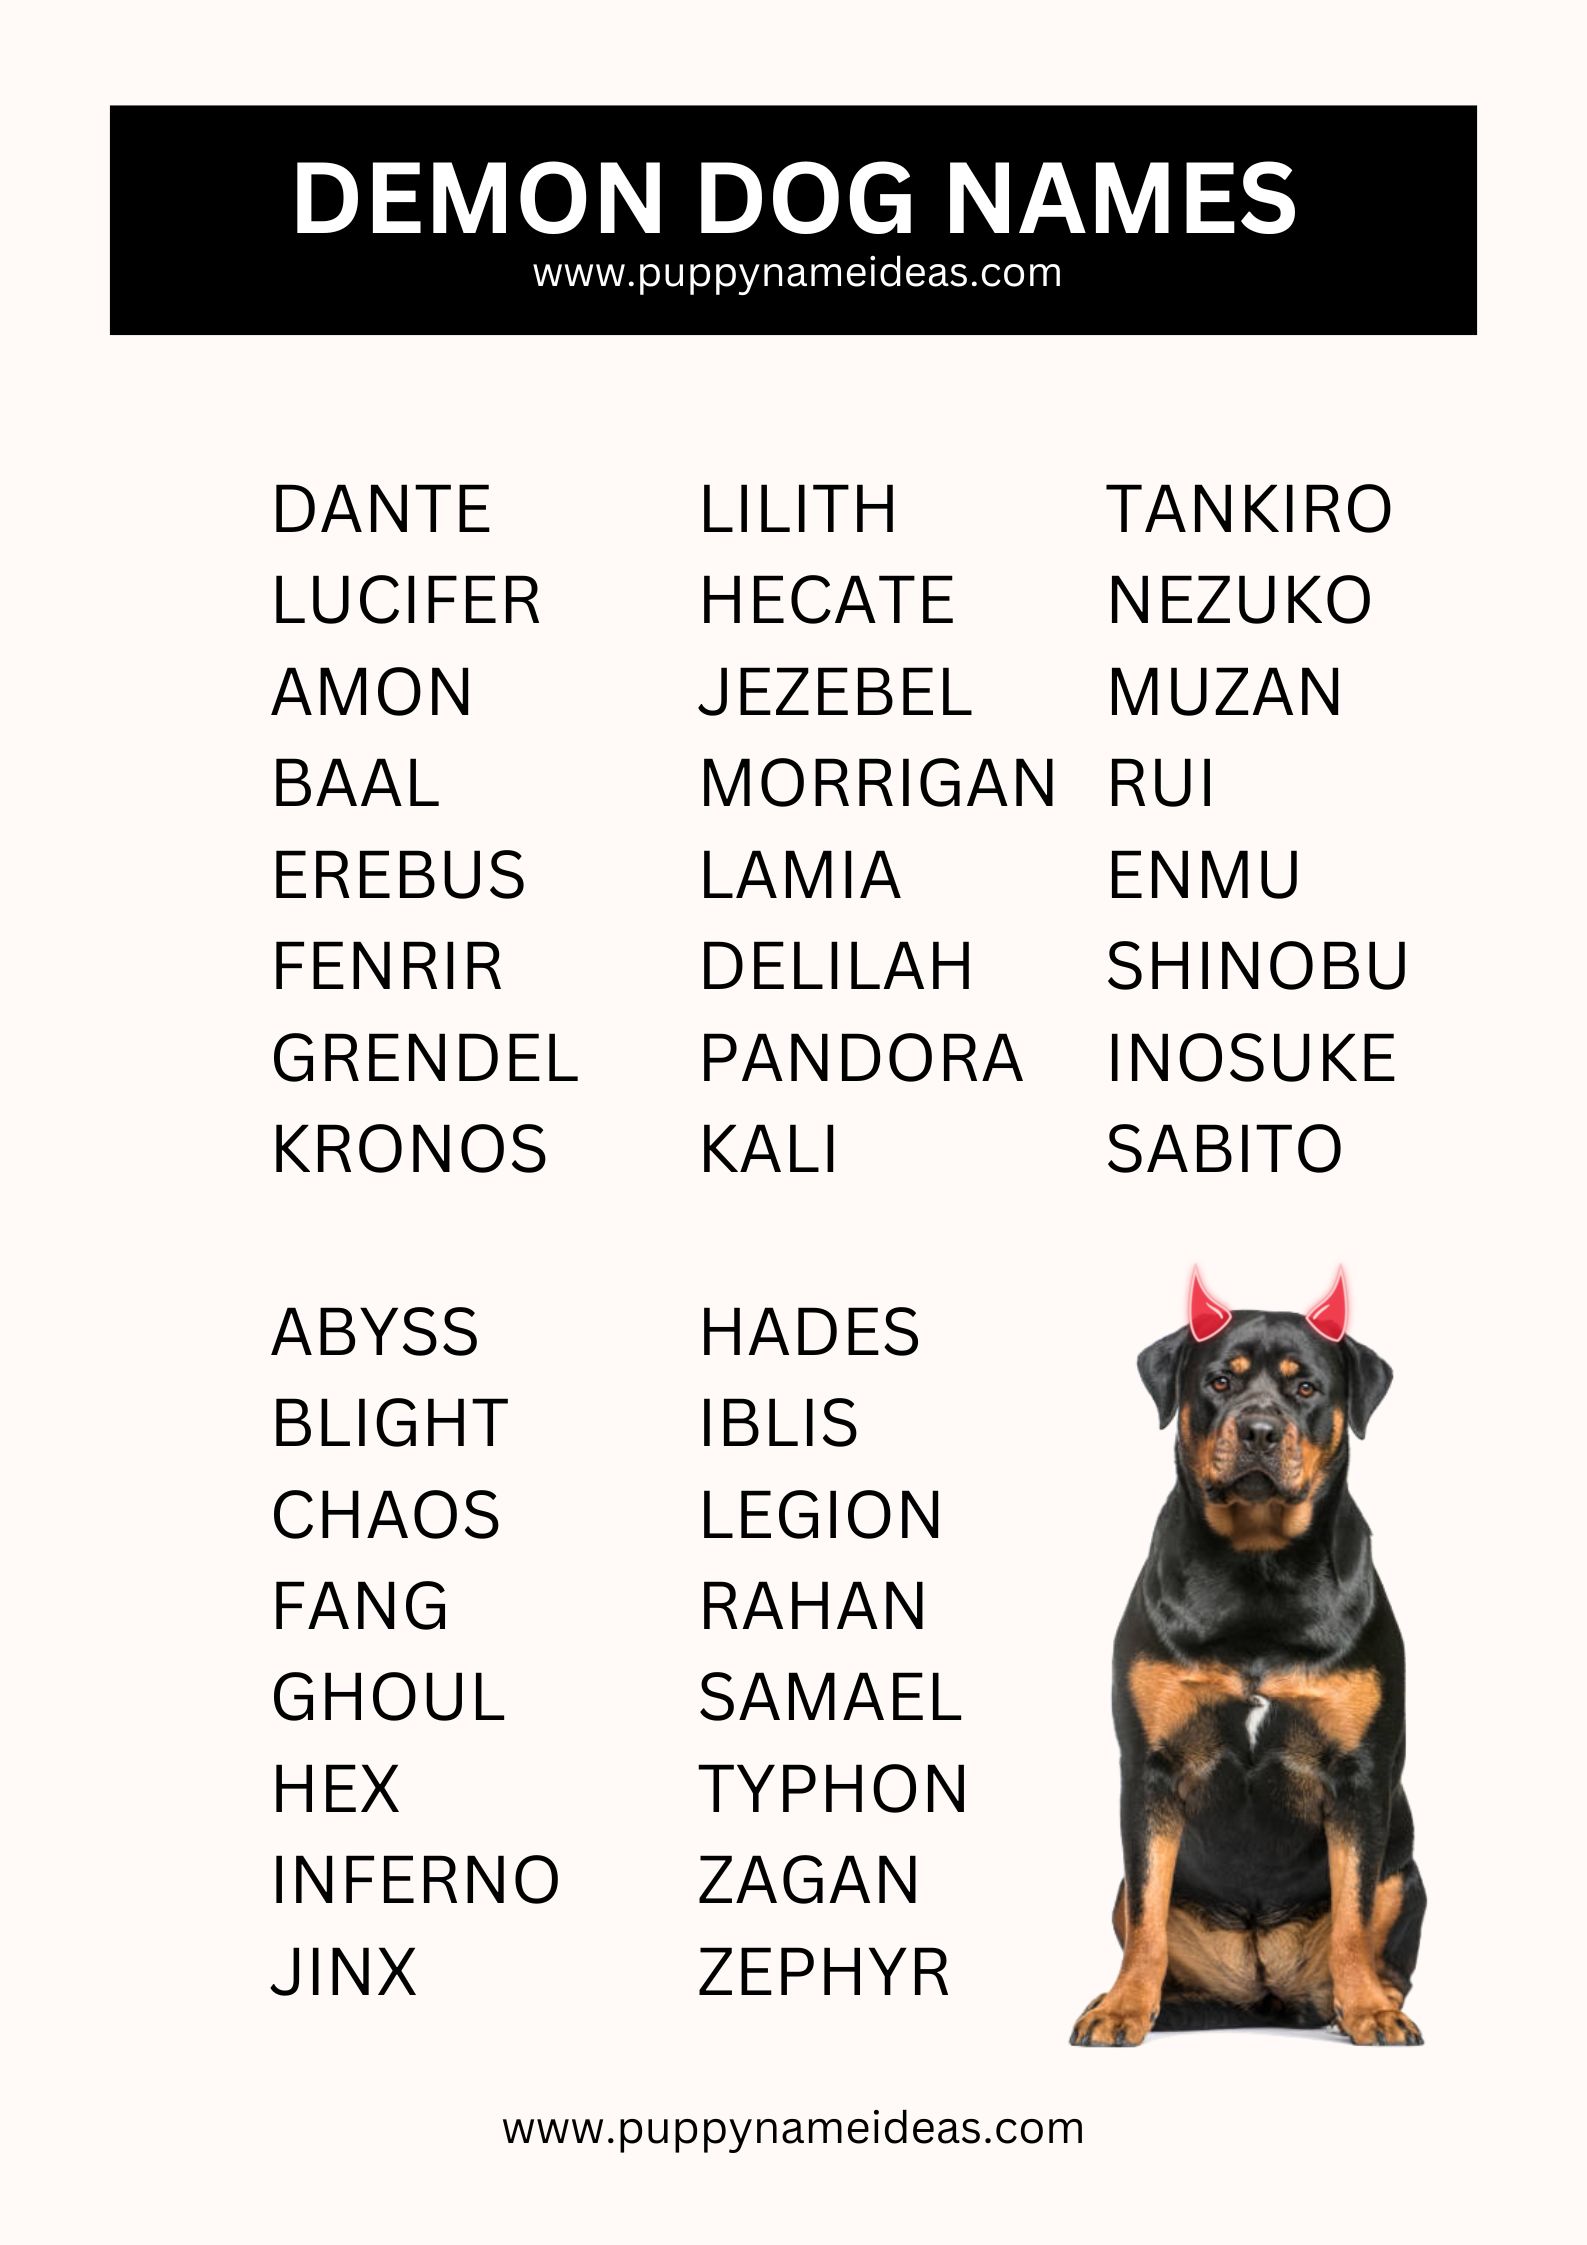 List Of Demon Dog Names